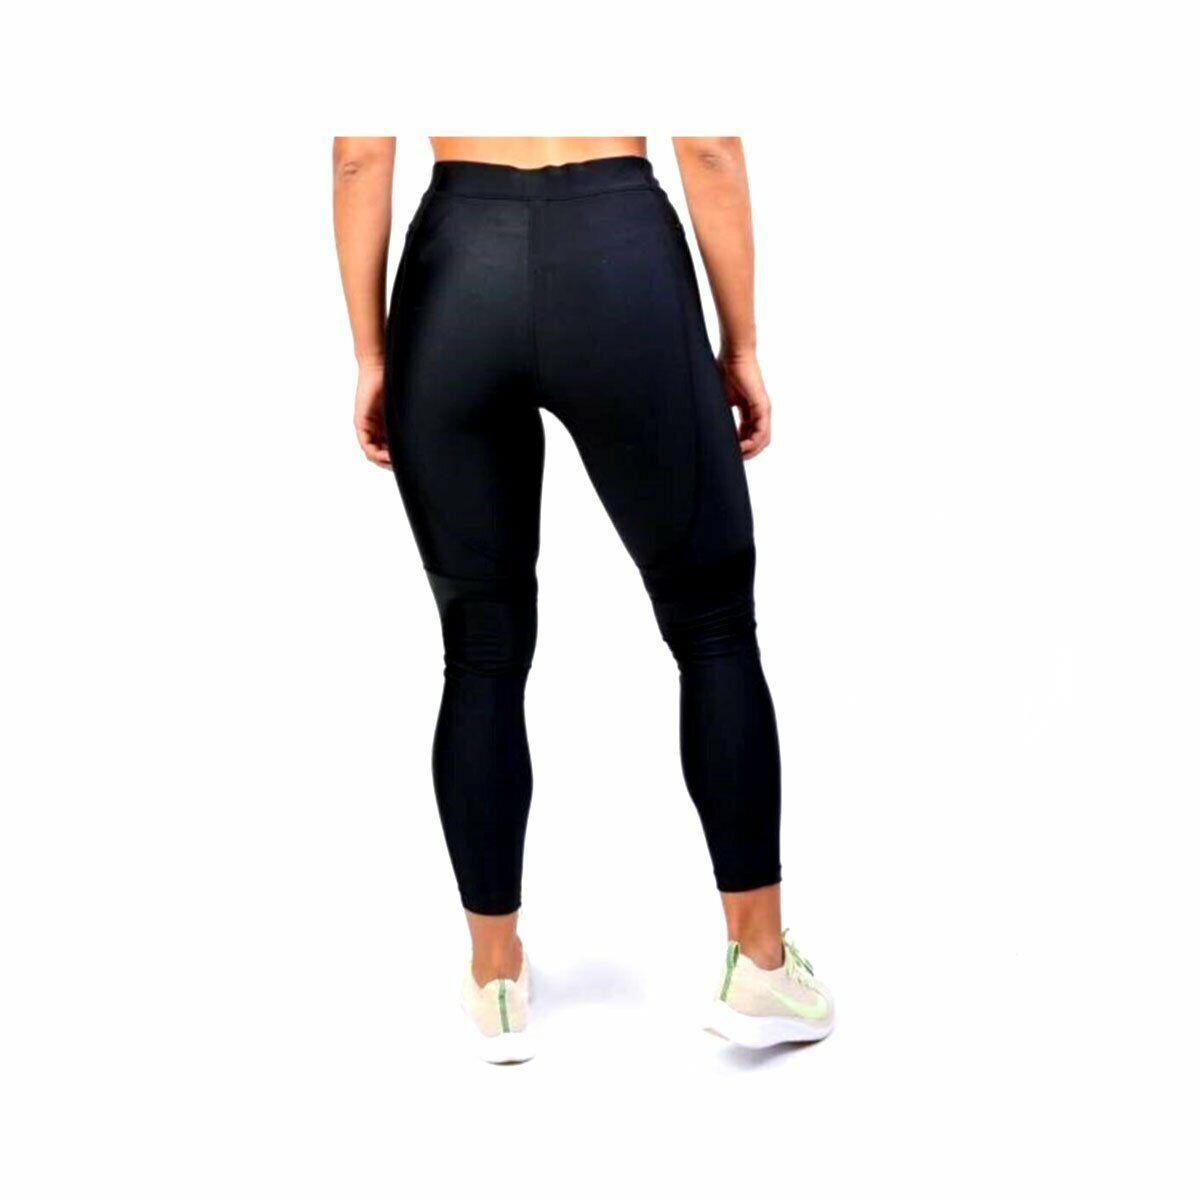 Nike Power Speed Running Tight Fit CT7381-010 Black Women`s Size Medium